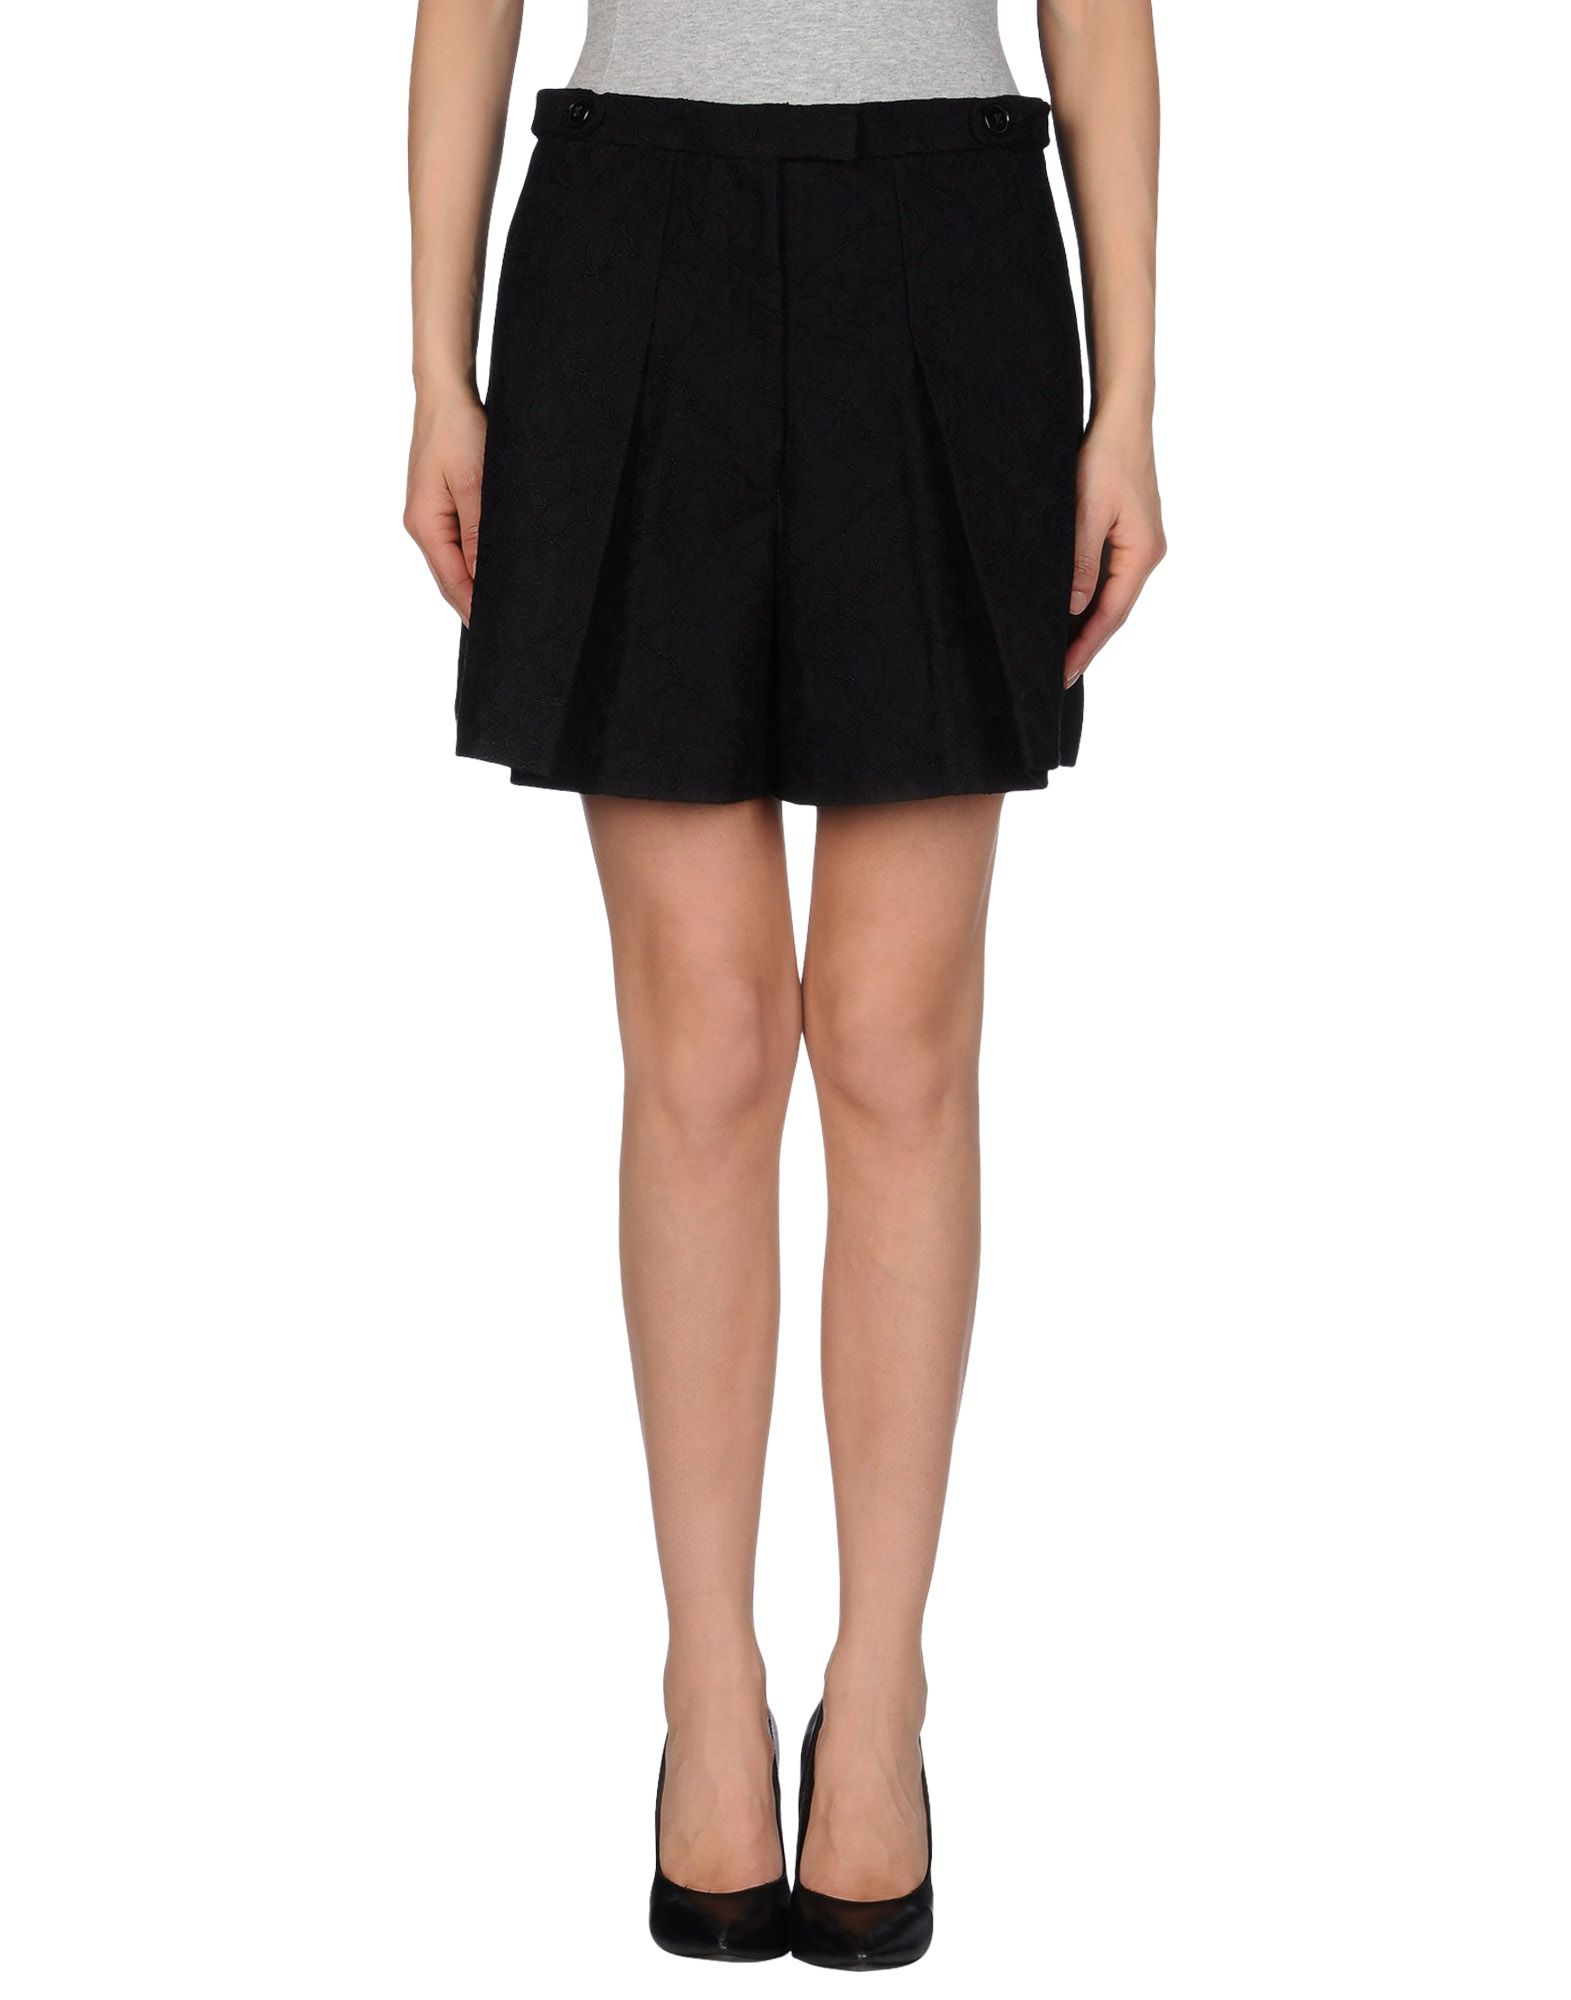 Victoria Beckham Mini Skirt in Black | Lyst